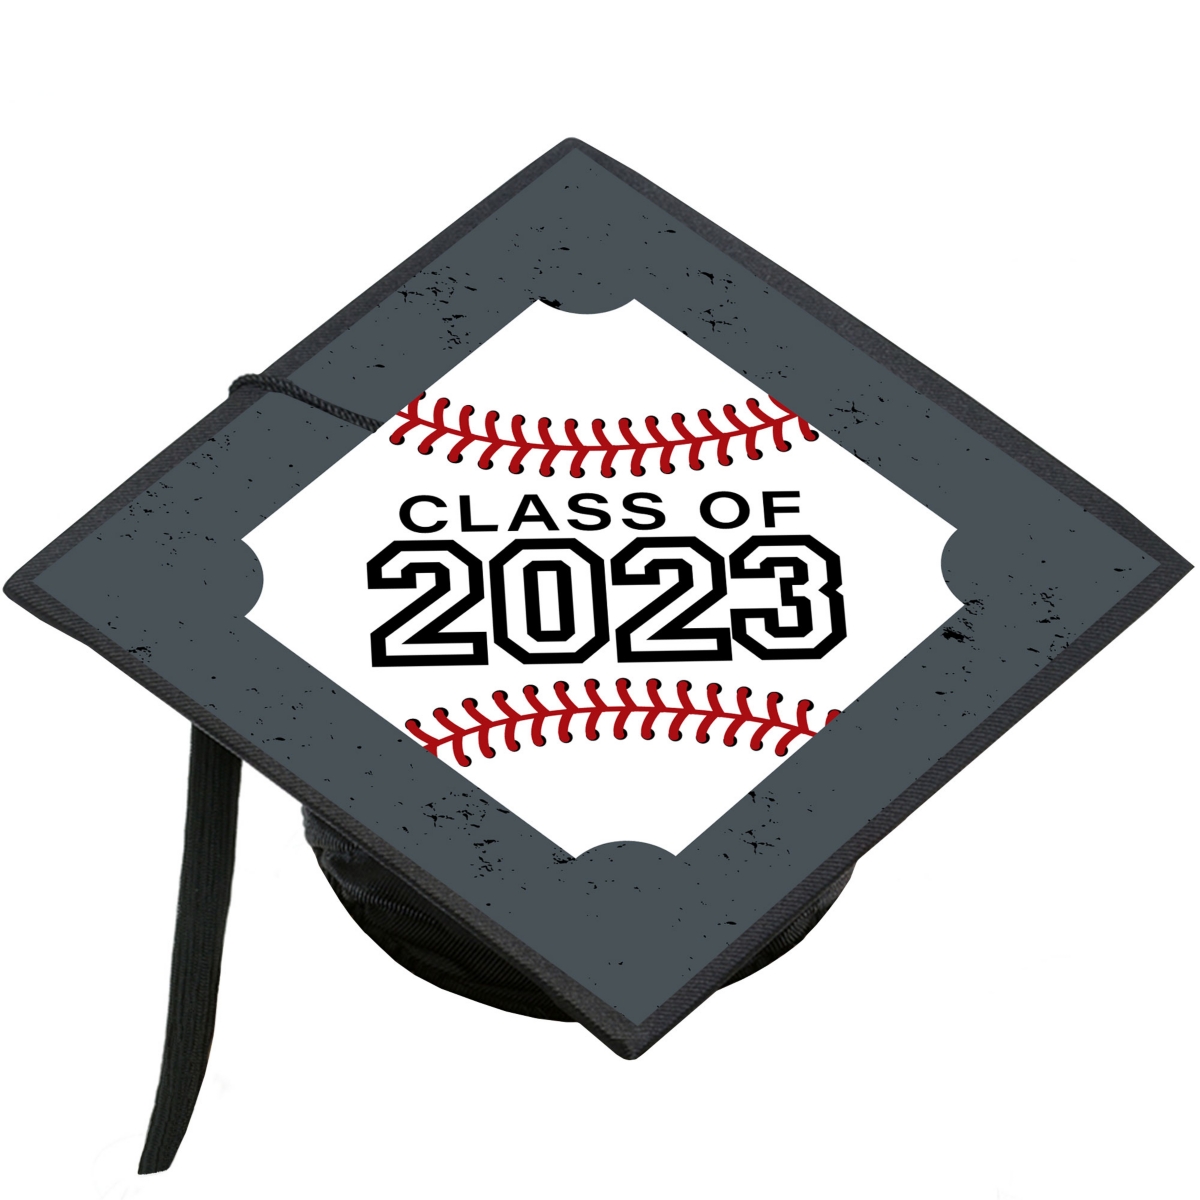 Big Dot of Happiness 2024 Blue Graduation Decorations - DIY Party  Essentials - Set of 20